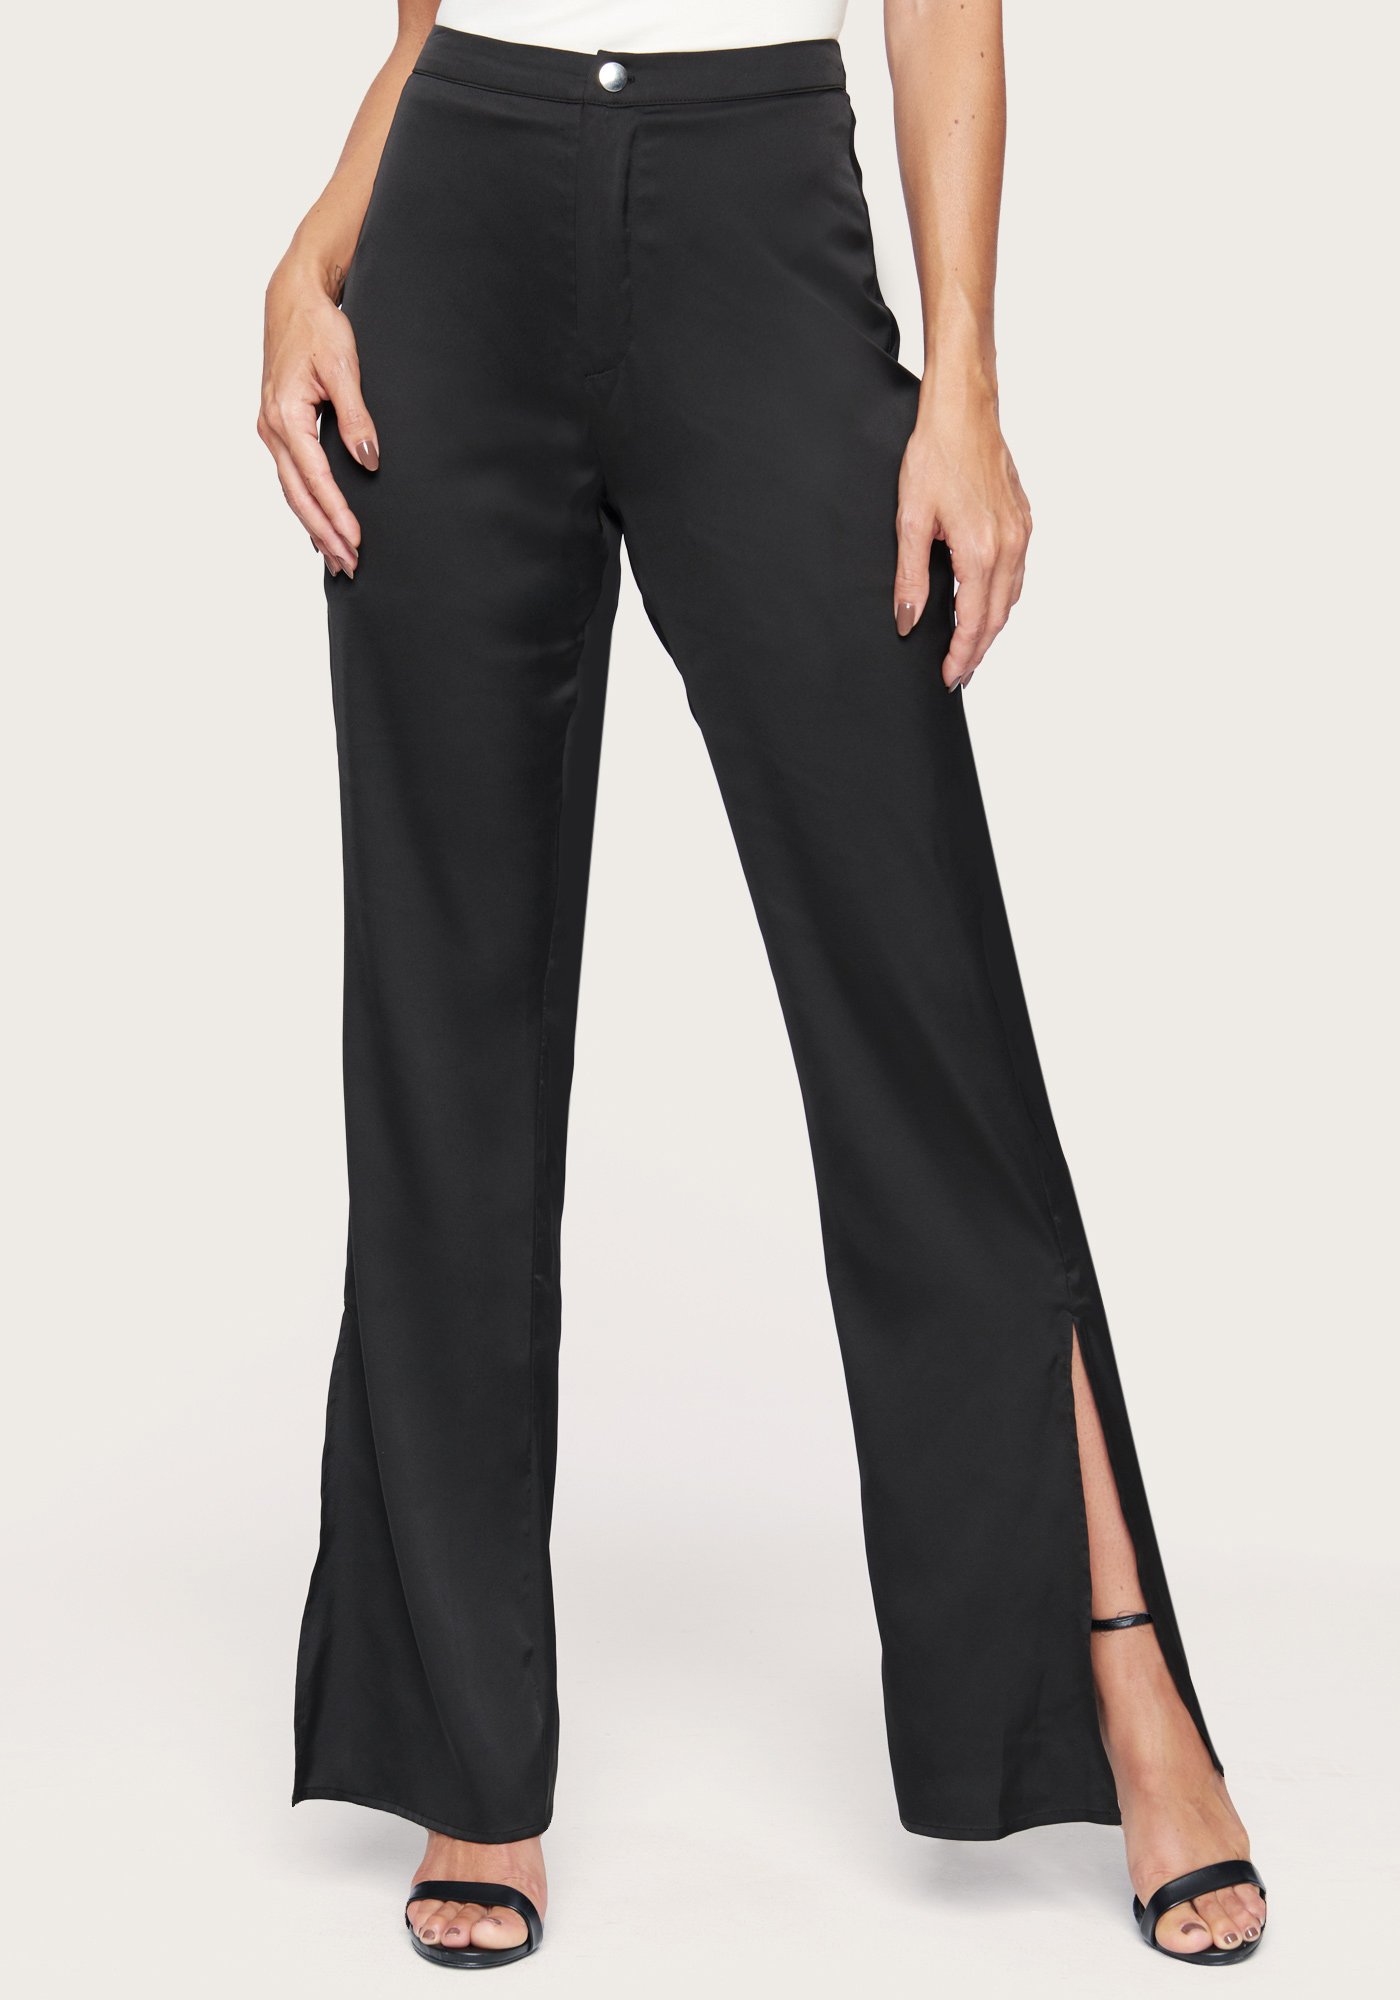 Bebe Women's Slit Wide Leg Pant, Size 6 in Black Polyester